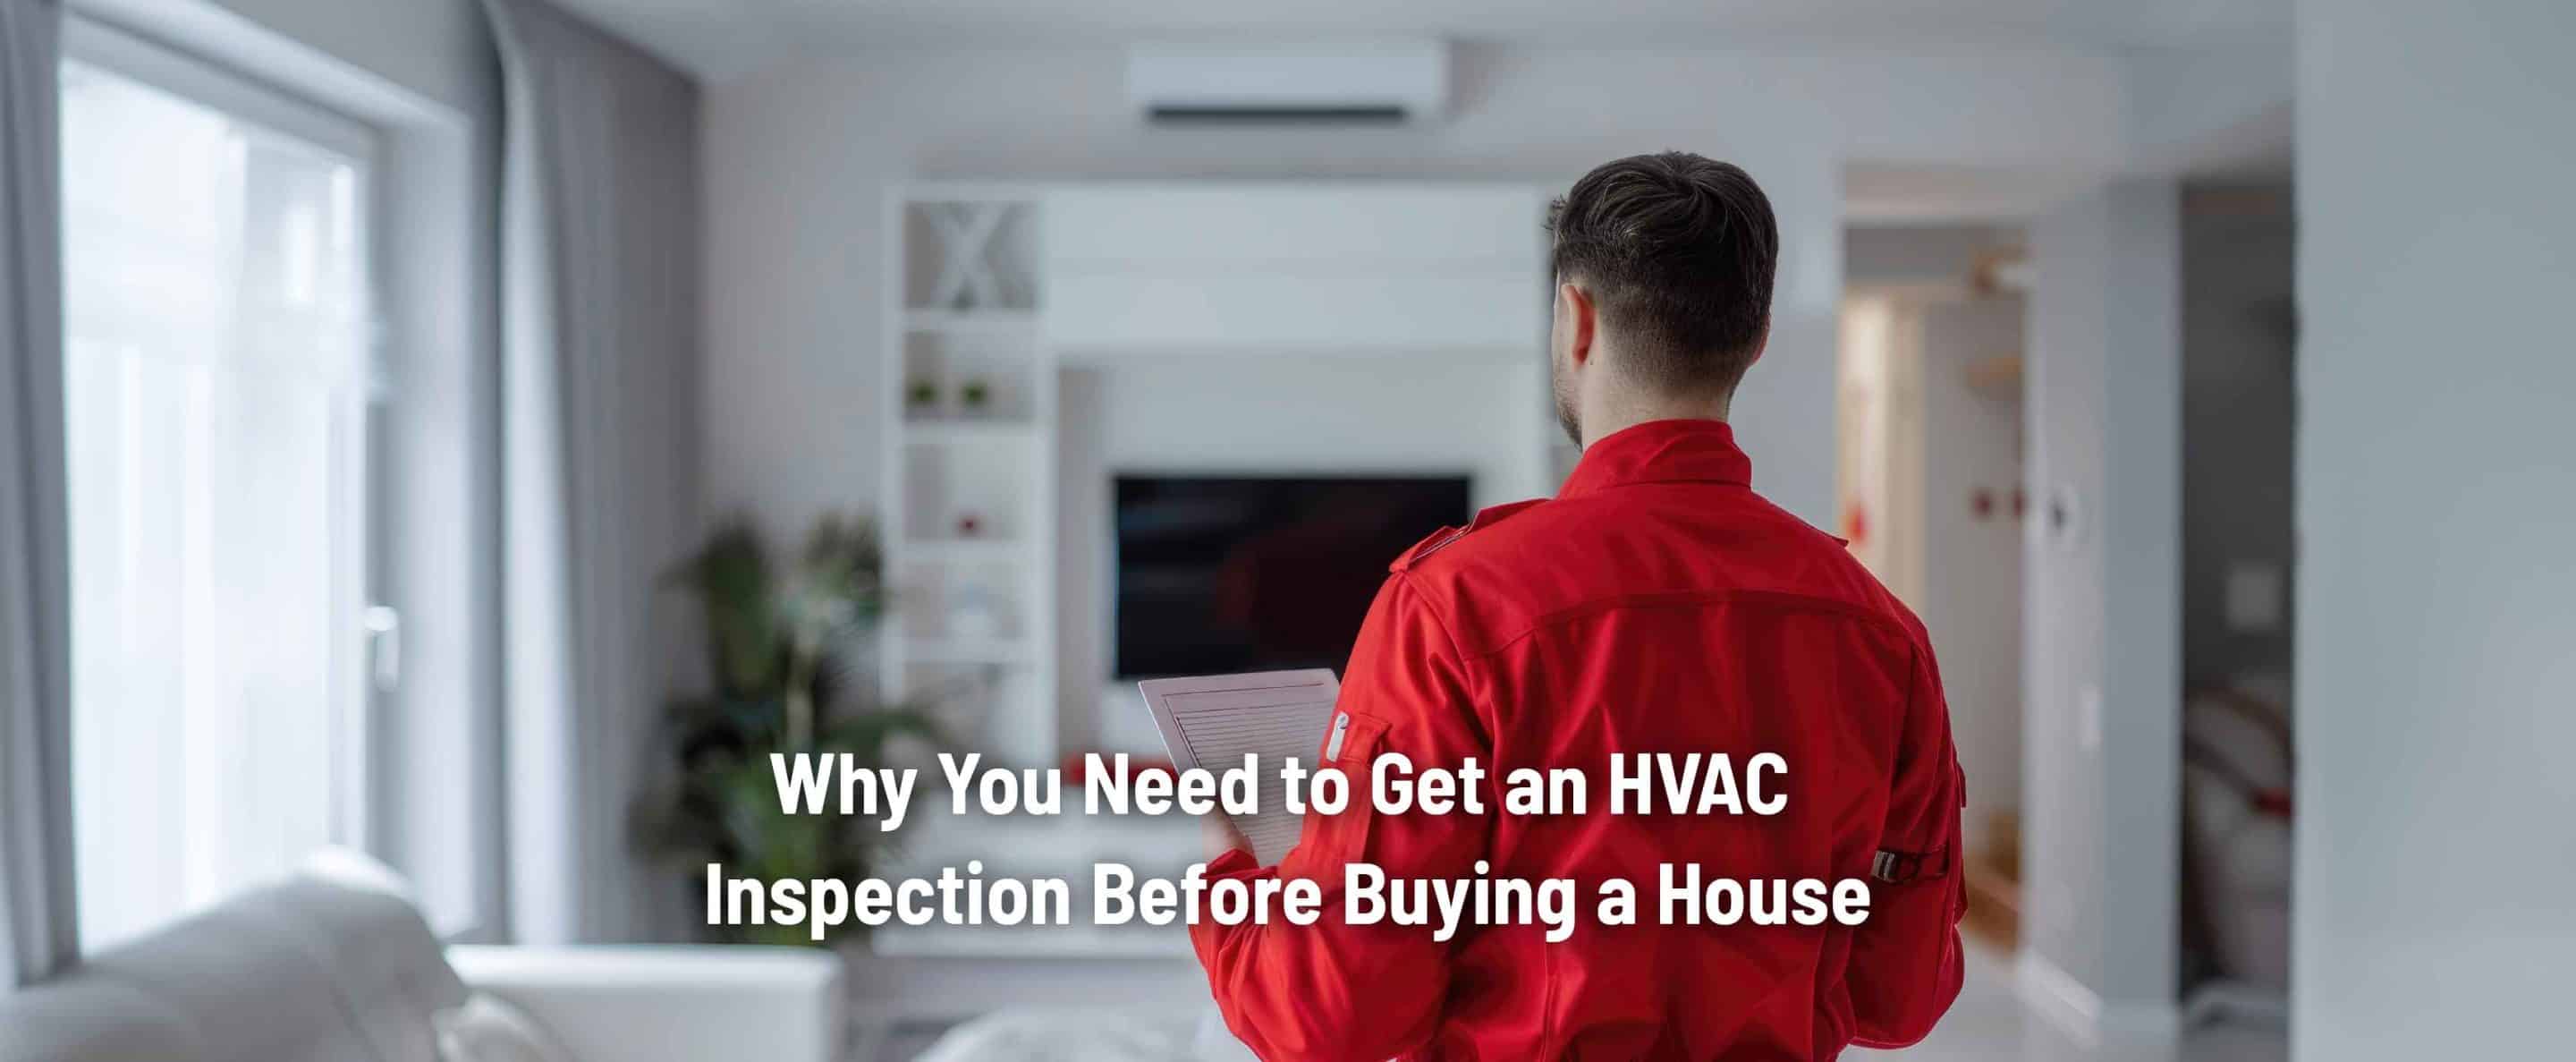 HVAC inspection